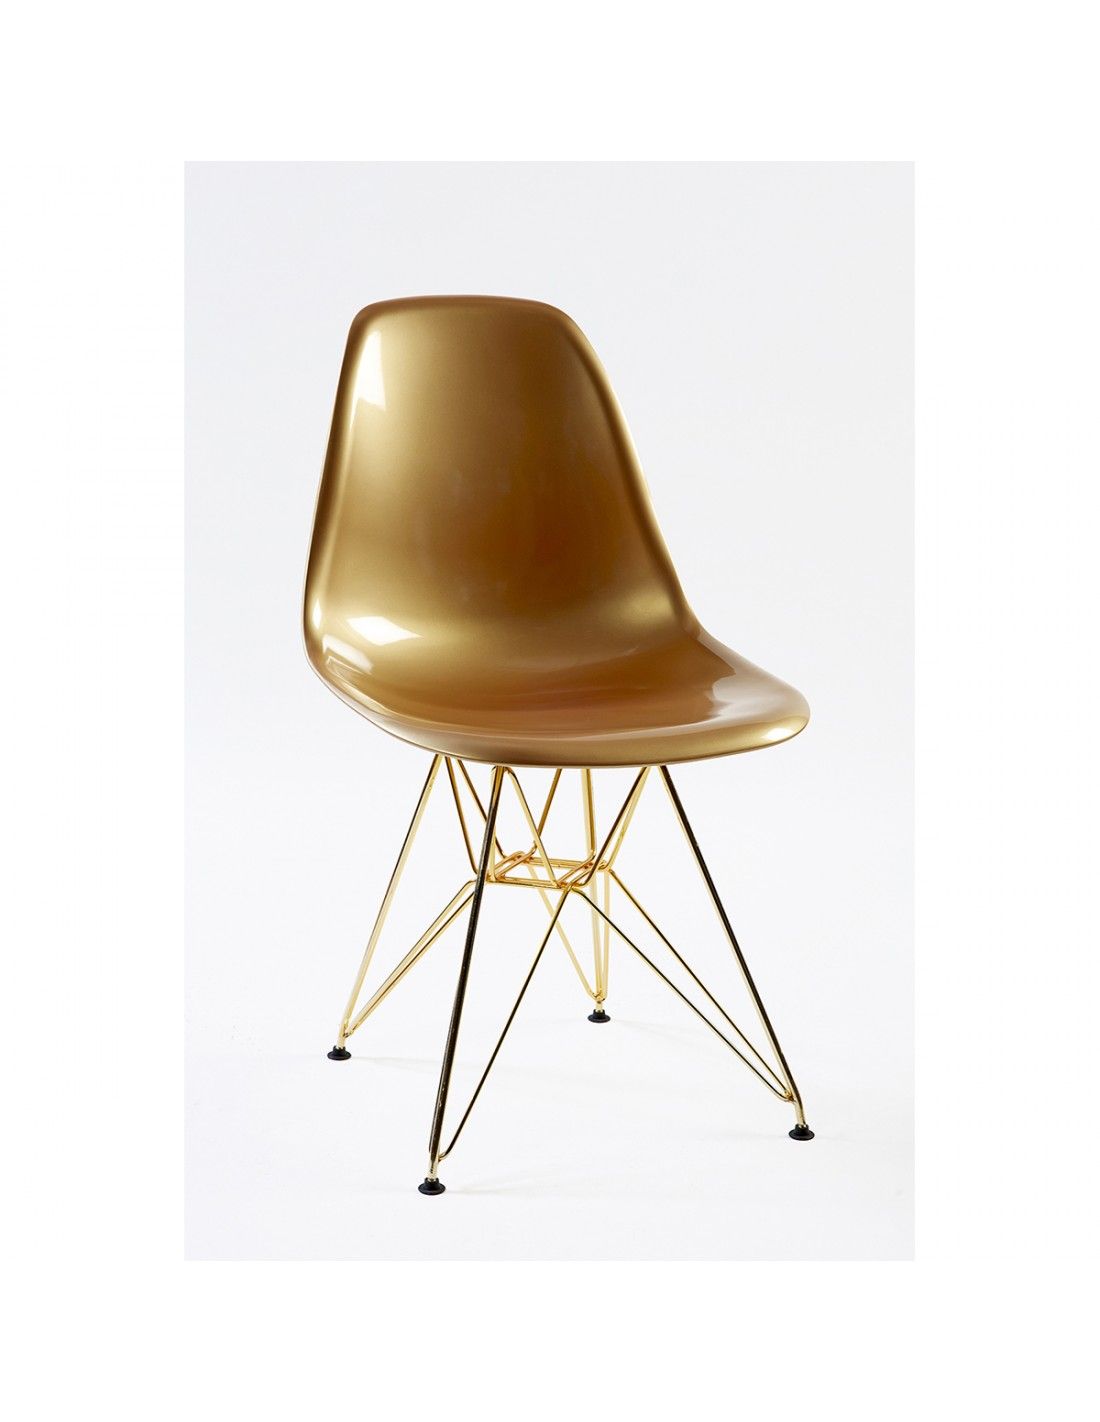 130 G silla dorada pata metal dorado